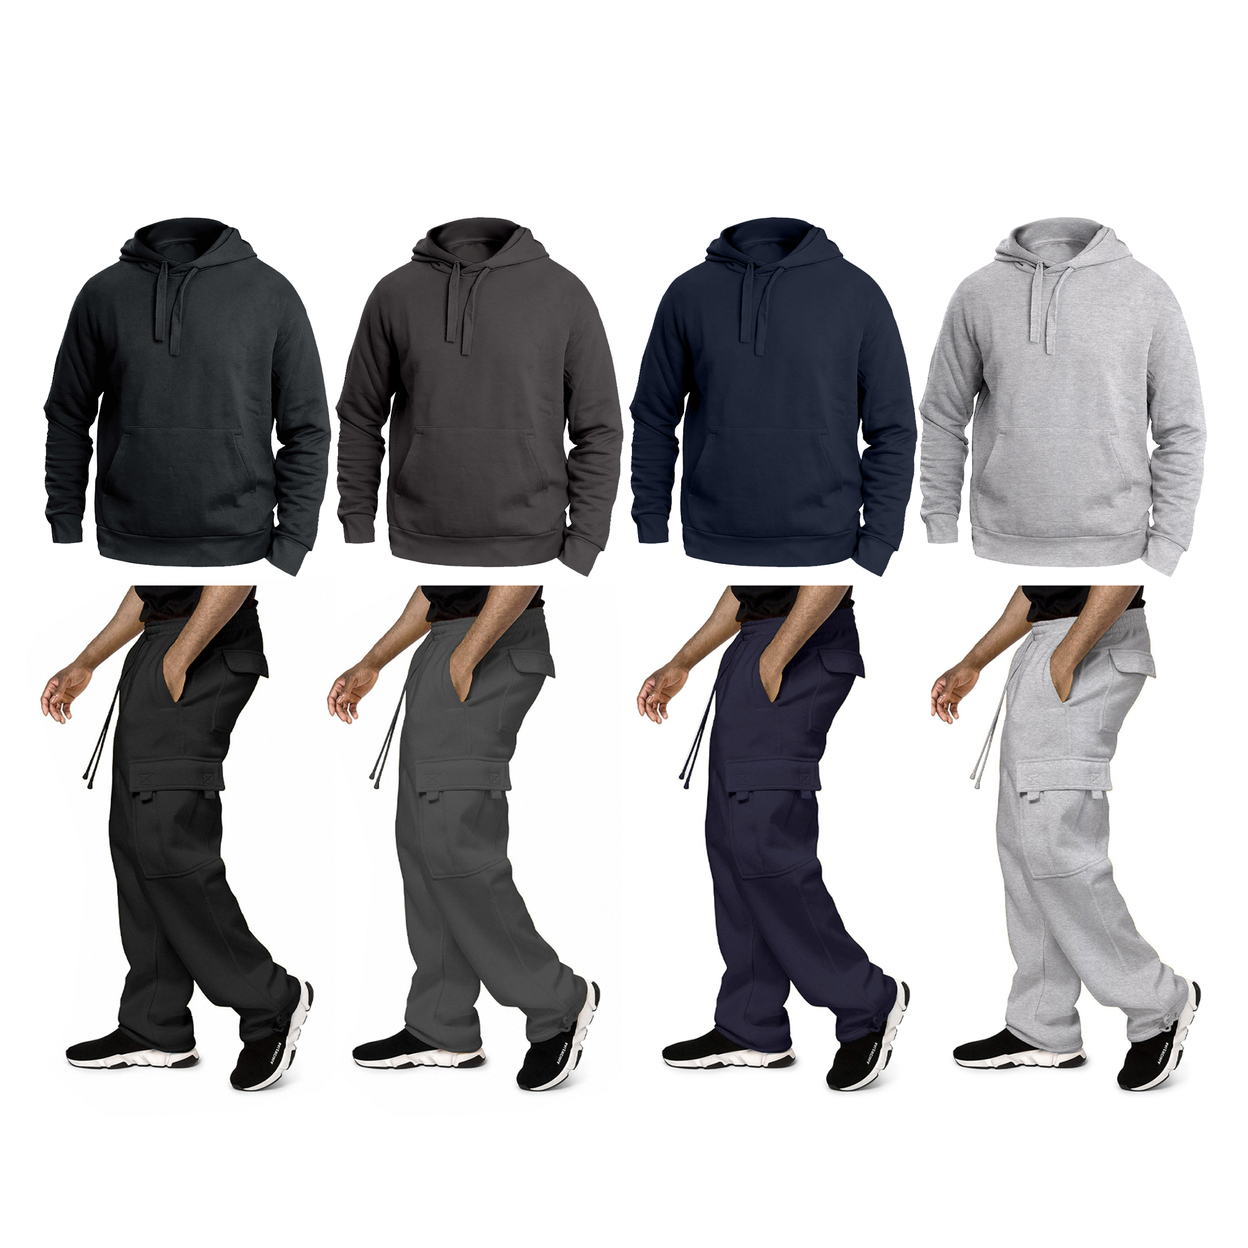 Multi-Pack: Big & Tall Men's Winter Warm Cozy Athletic Fleece Lined Multi-Pocket Cargo Sweatsuit - Grey, 2-pack, Large